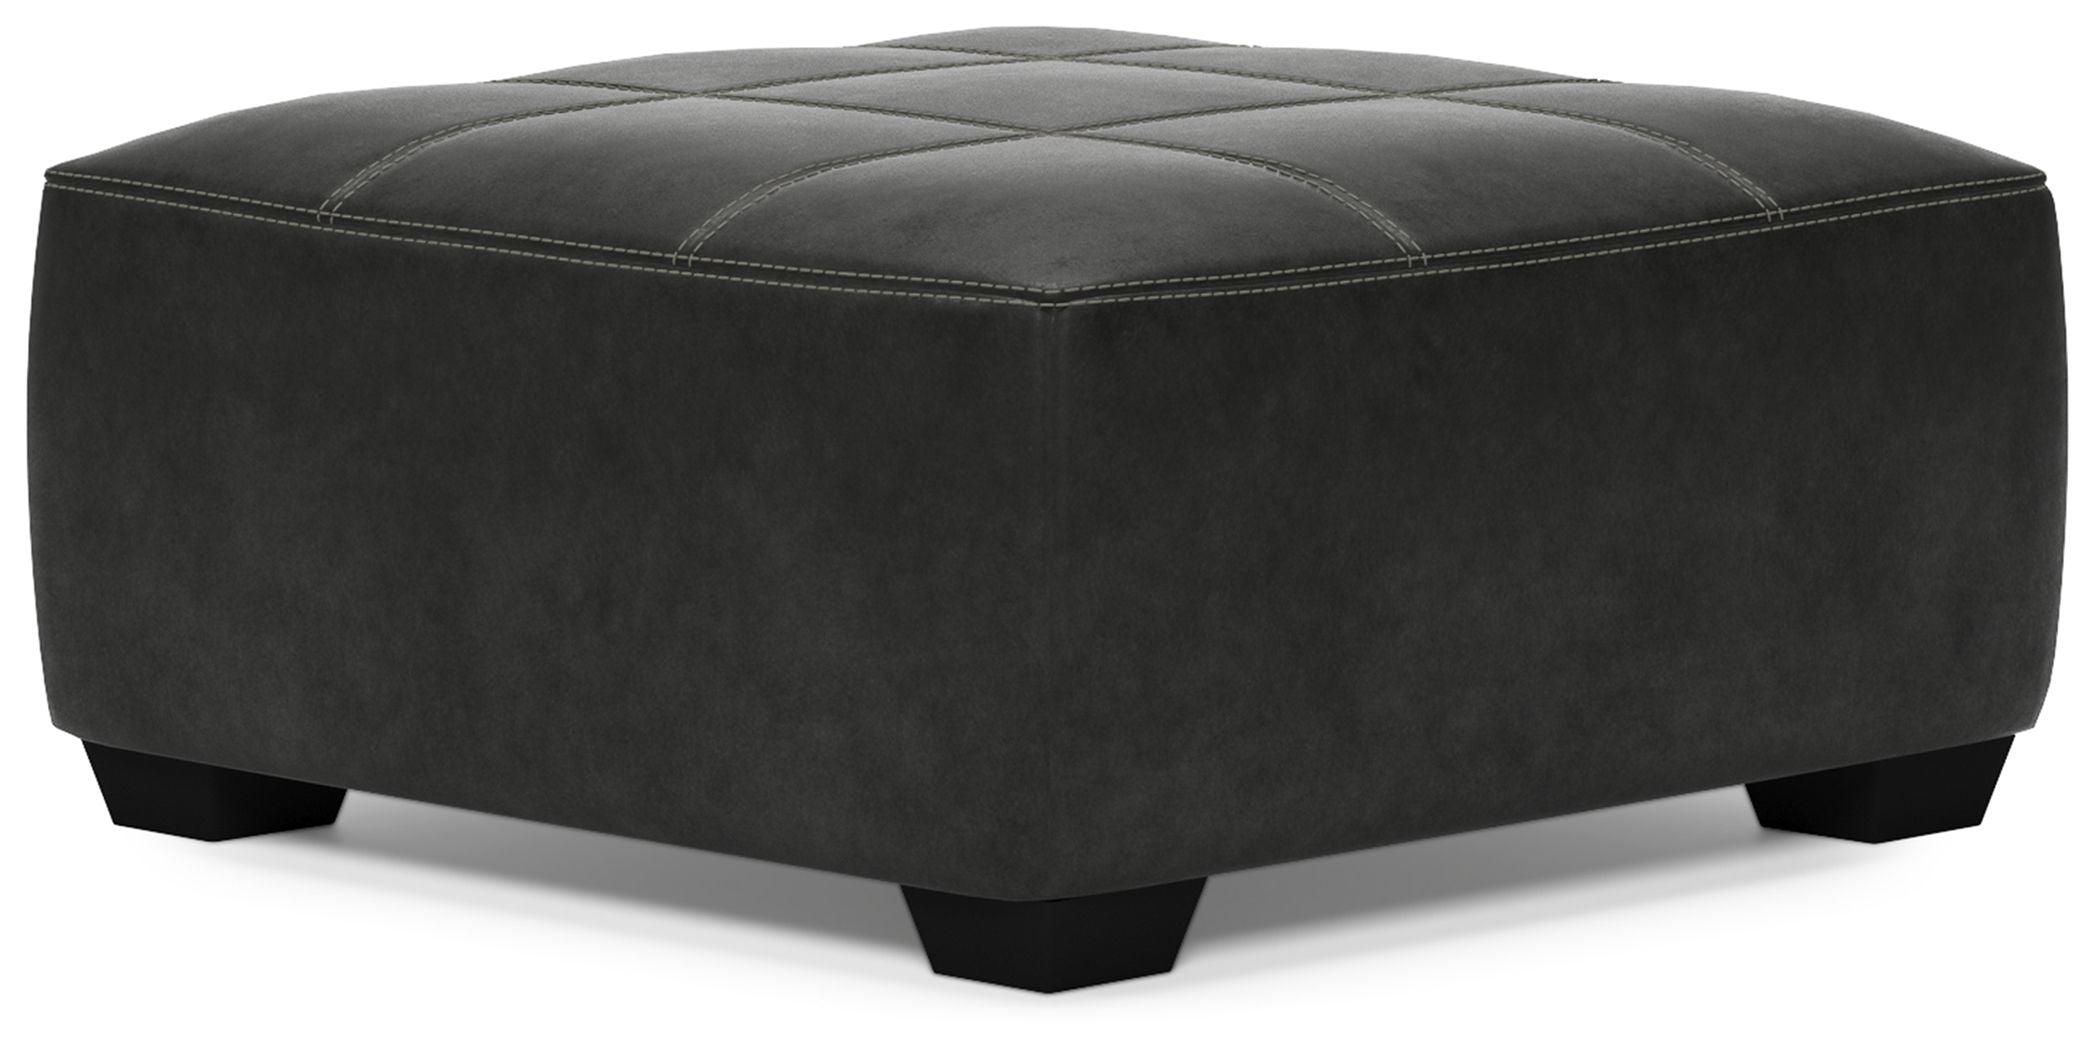 Ashley Furniture - Bilgray - Pewter - Oversized Accent Ottoman - 5th Avenue Furniture